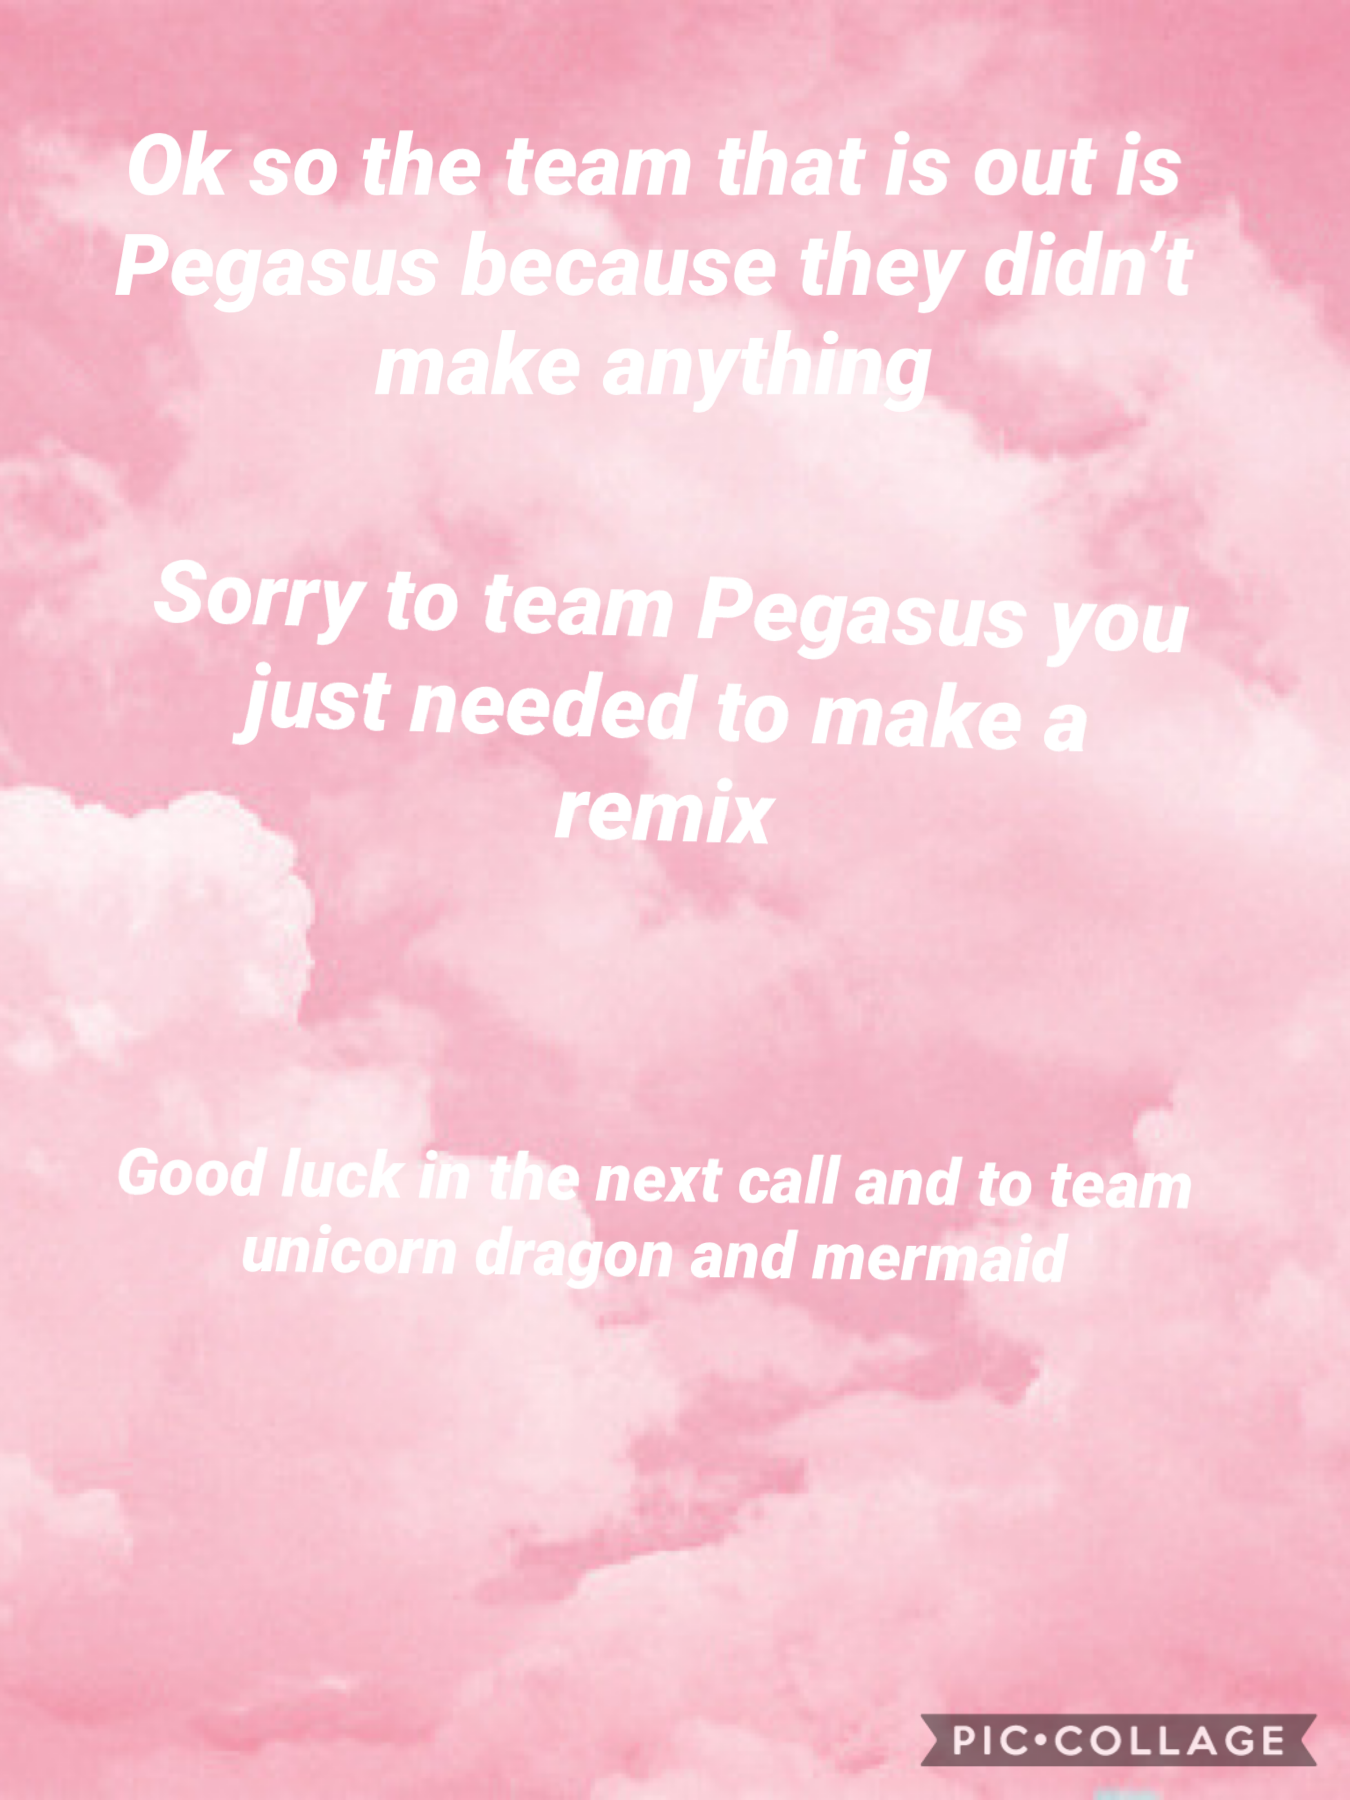 Sorry team Pegasus 